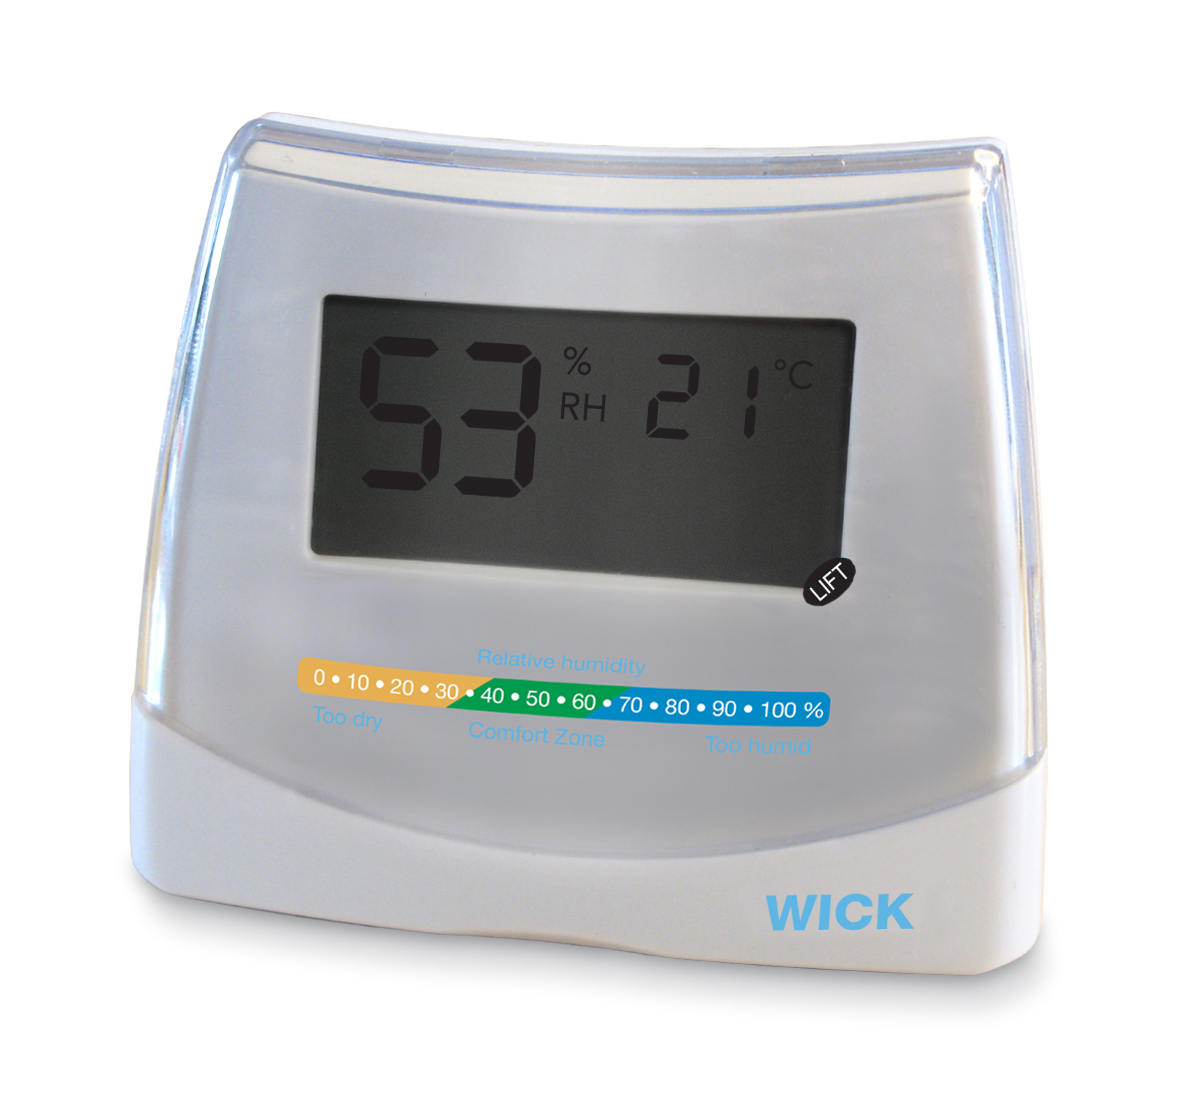 WICK W 70 DA Hygro-/Thermometer Weiß